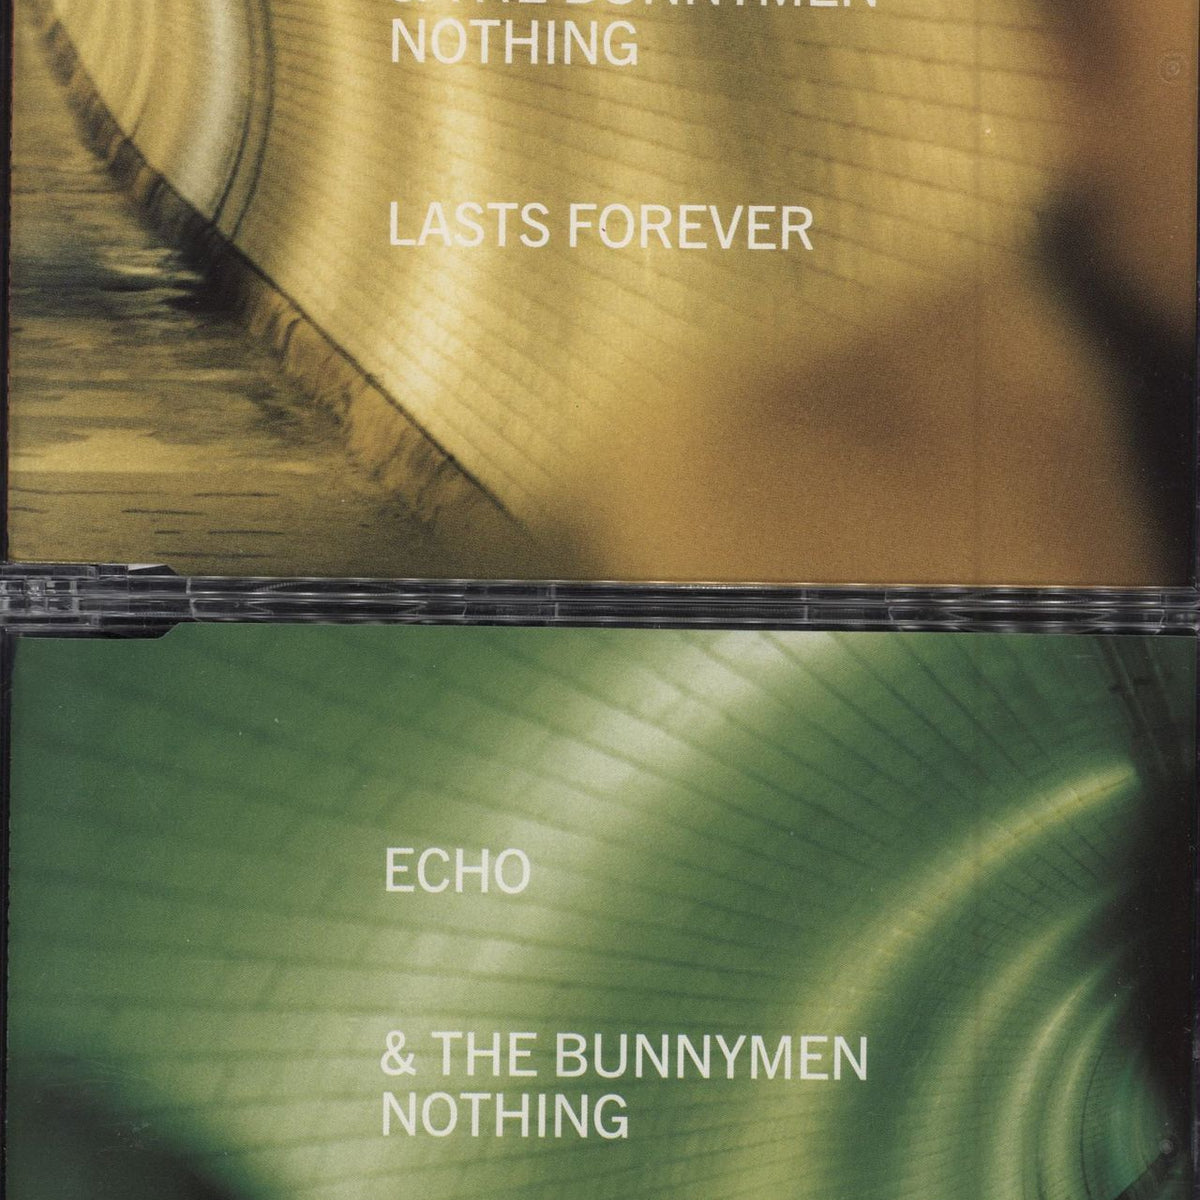 Echo u0026 The Bunnymen Nothing Lasts Forever - CD 1 u0026 2 UK 2-CD single se —  RareVinyl.com